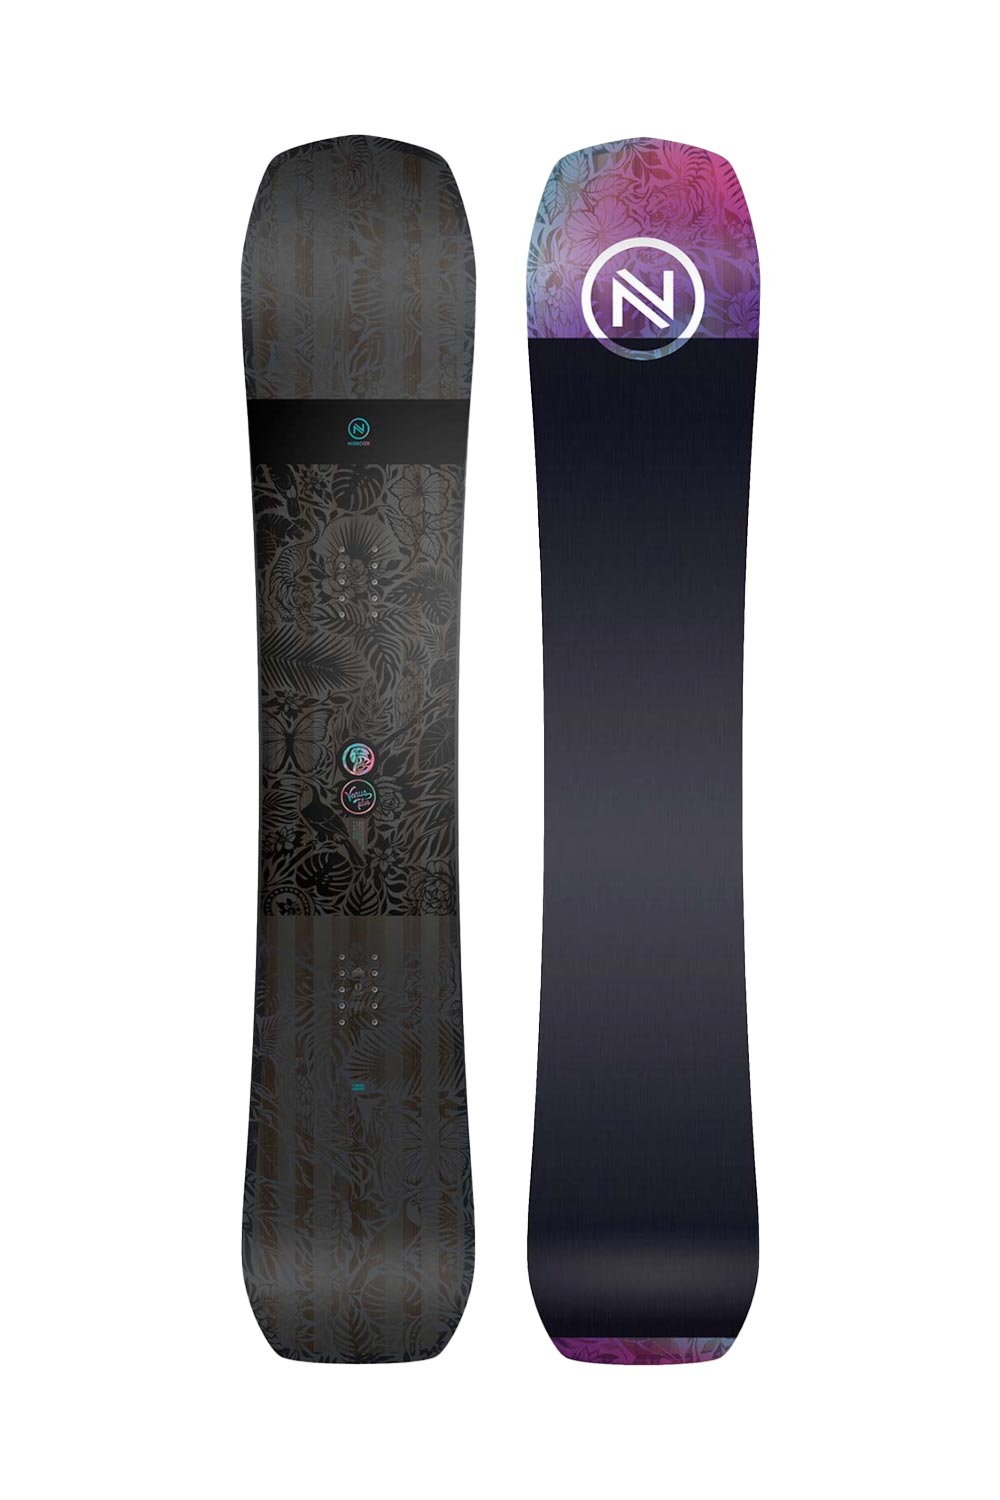 women's Nidecker Venus Plus snowboard, black floral pattern